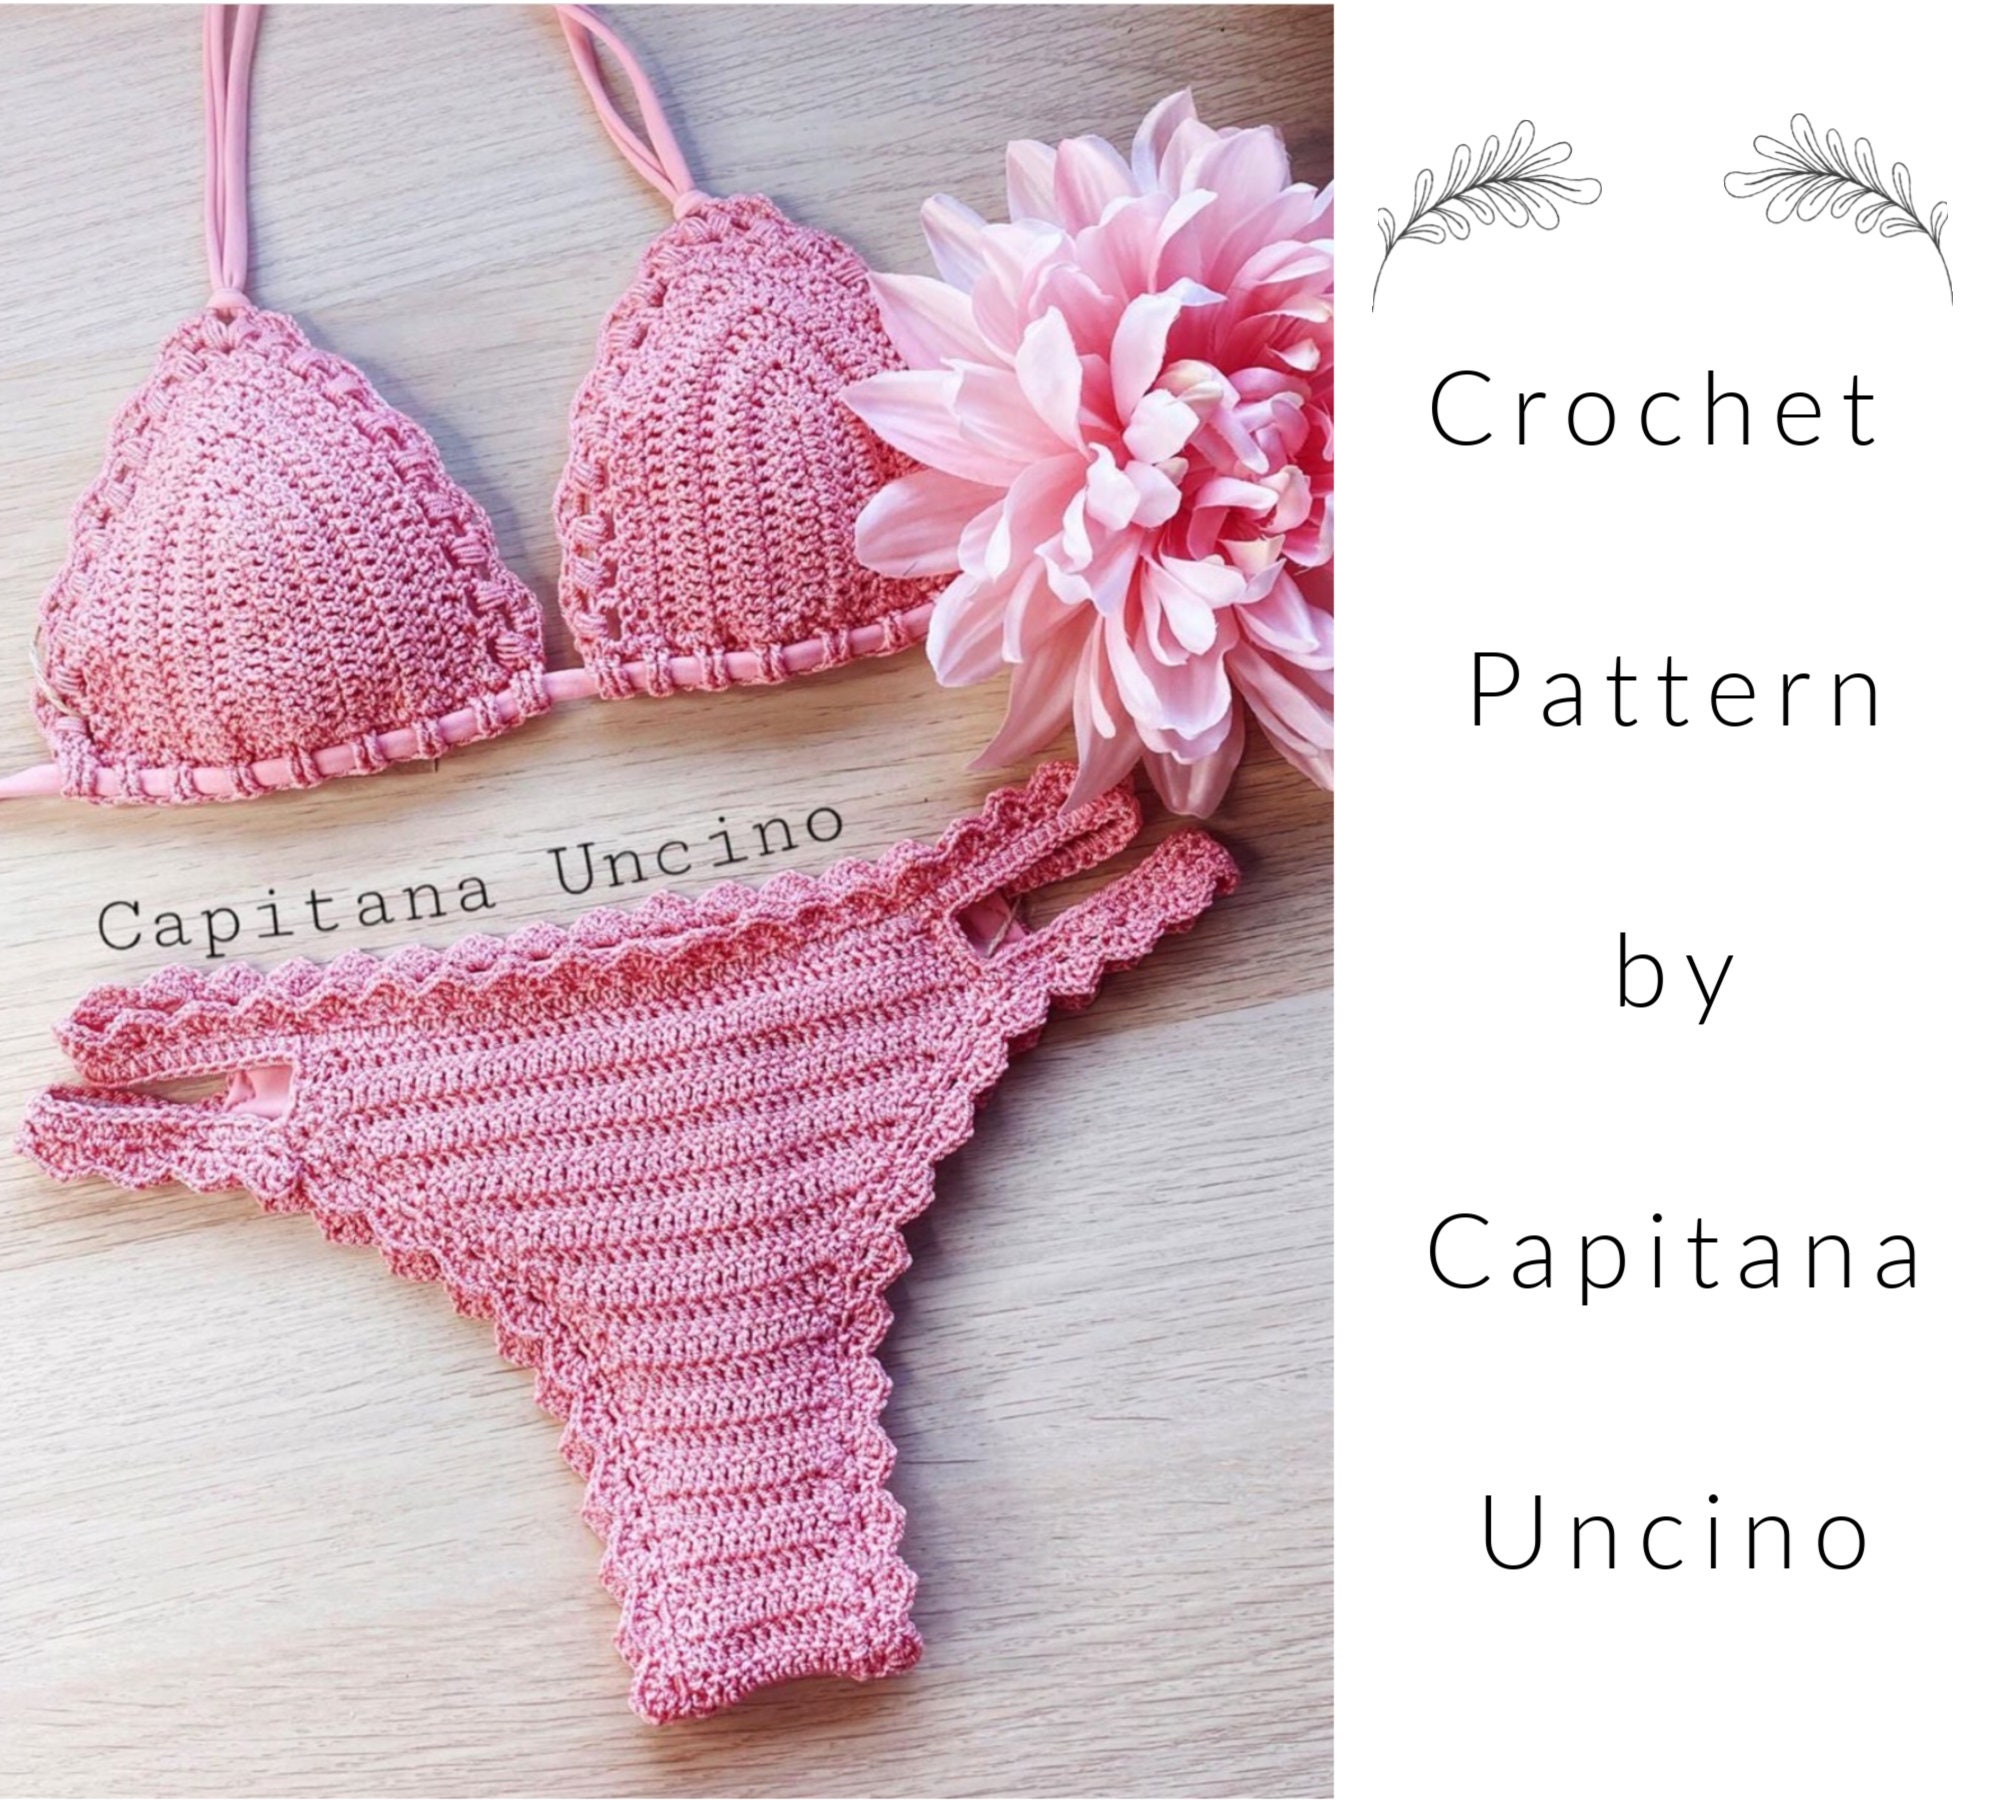 PDF-file for Crochet PATTERN, Marina Crochet Bikini Top and Brazilian ...